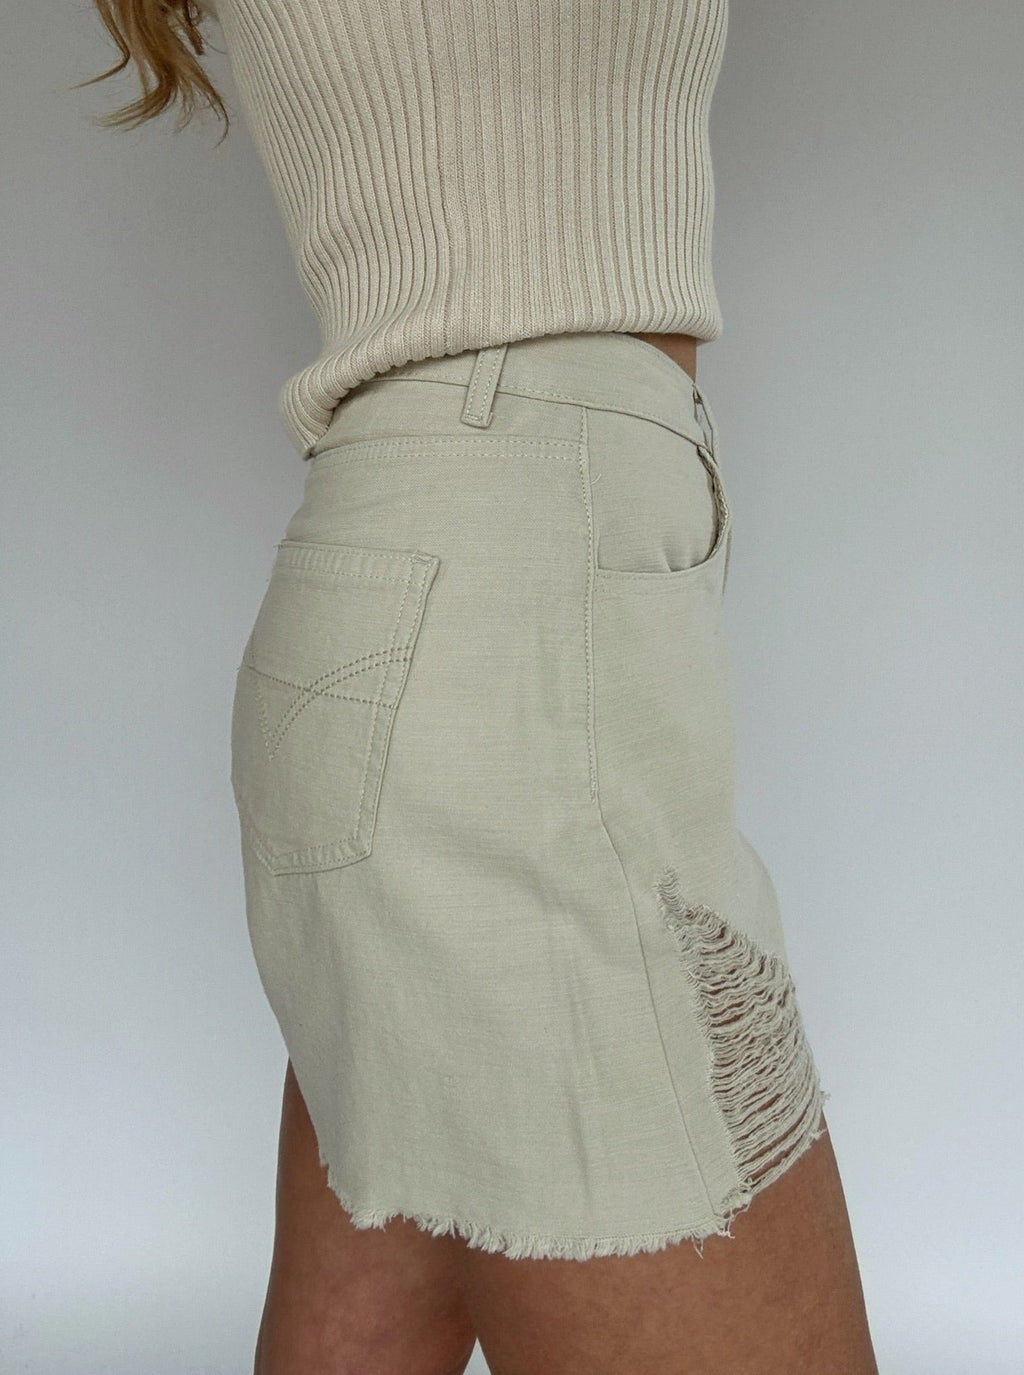 Mirage Natural Denim Shorts